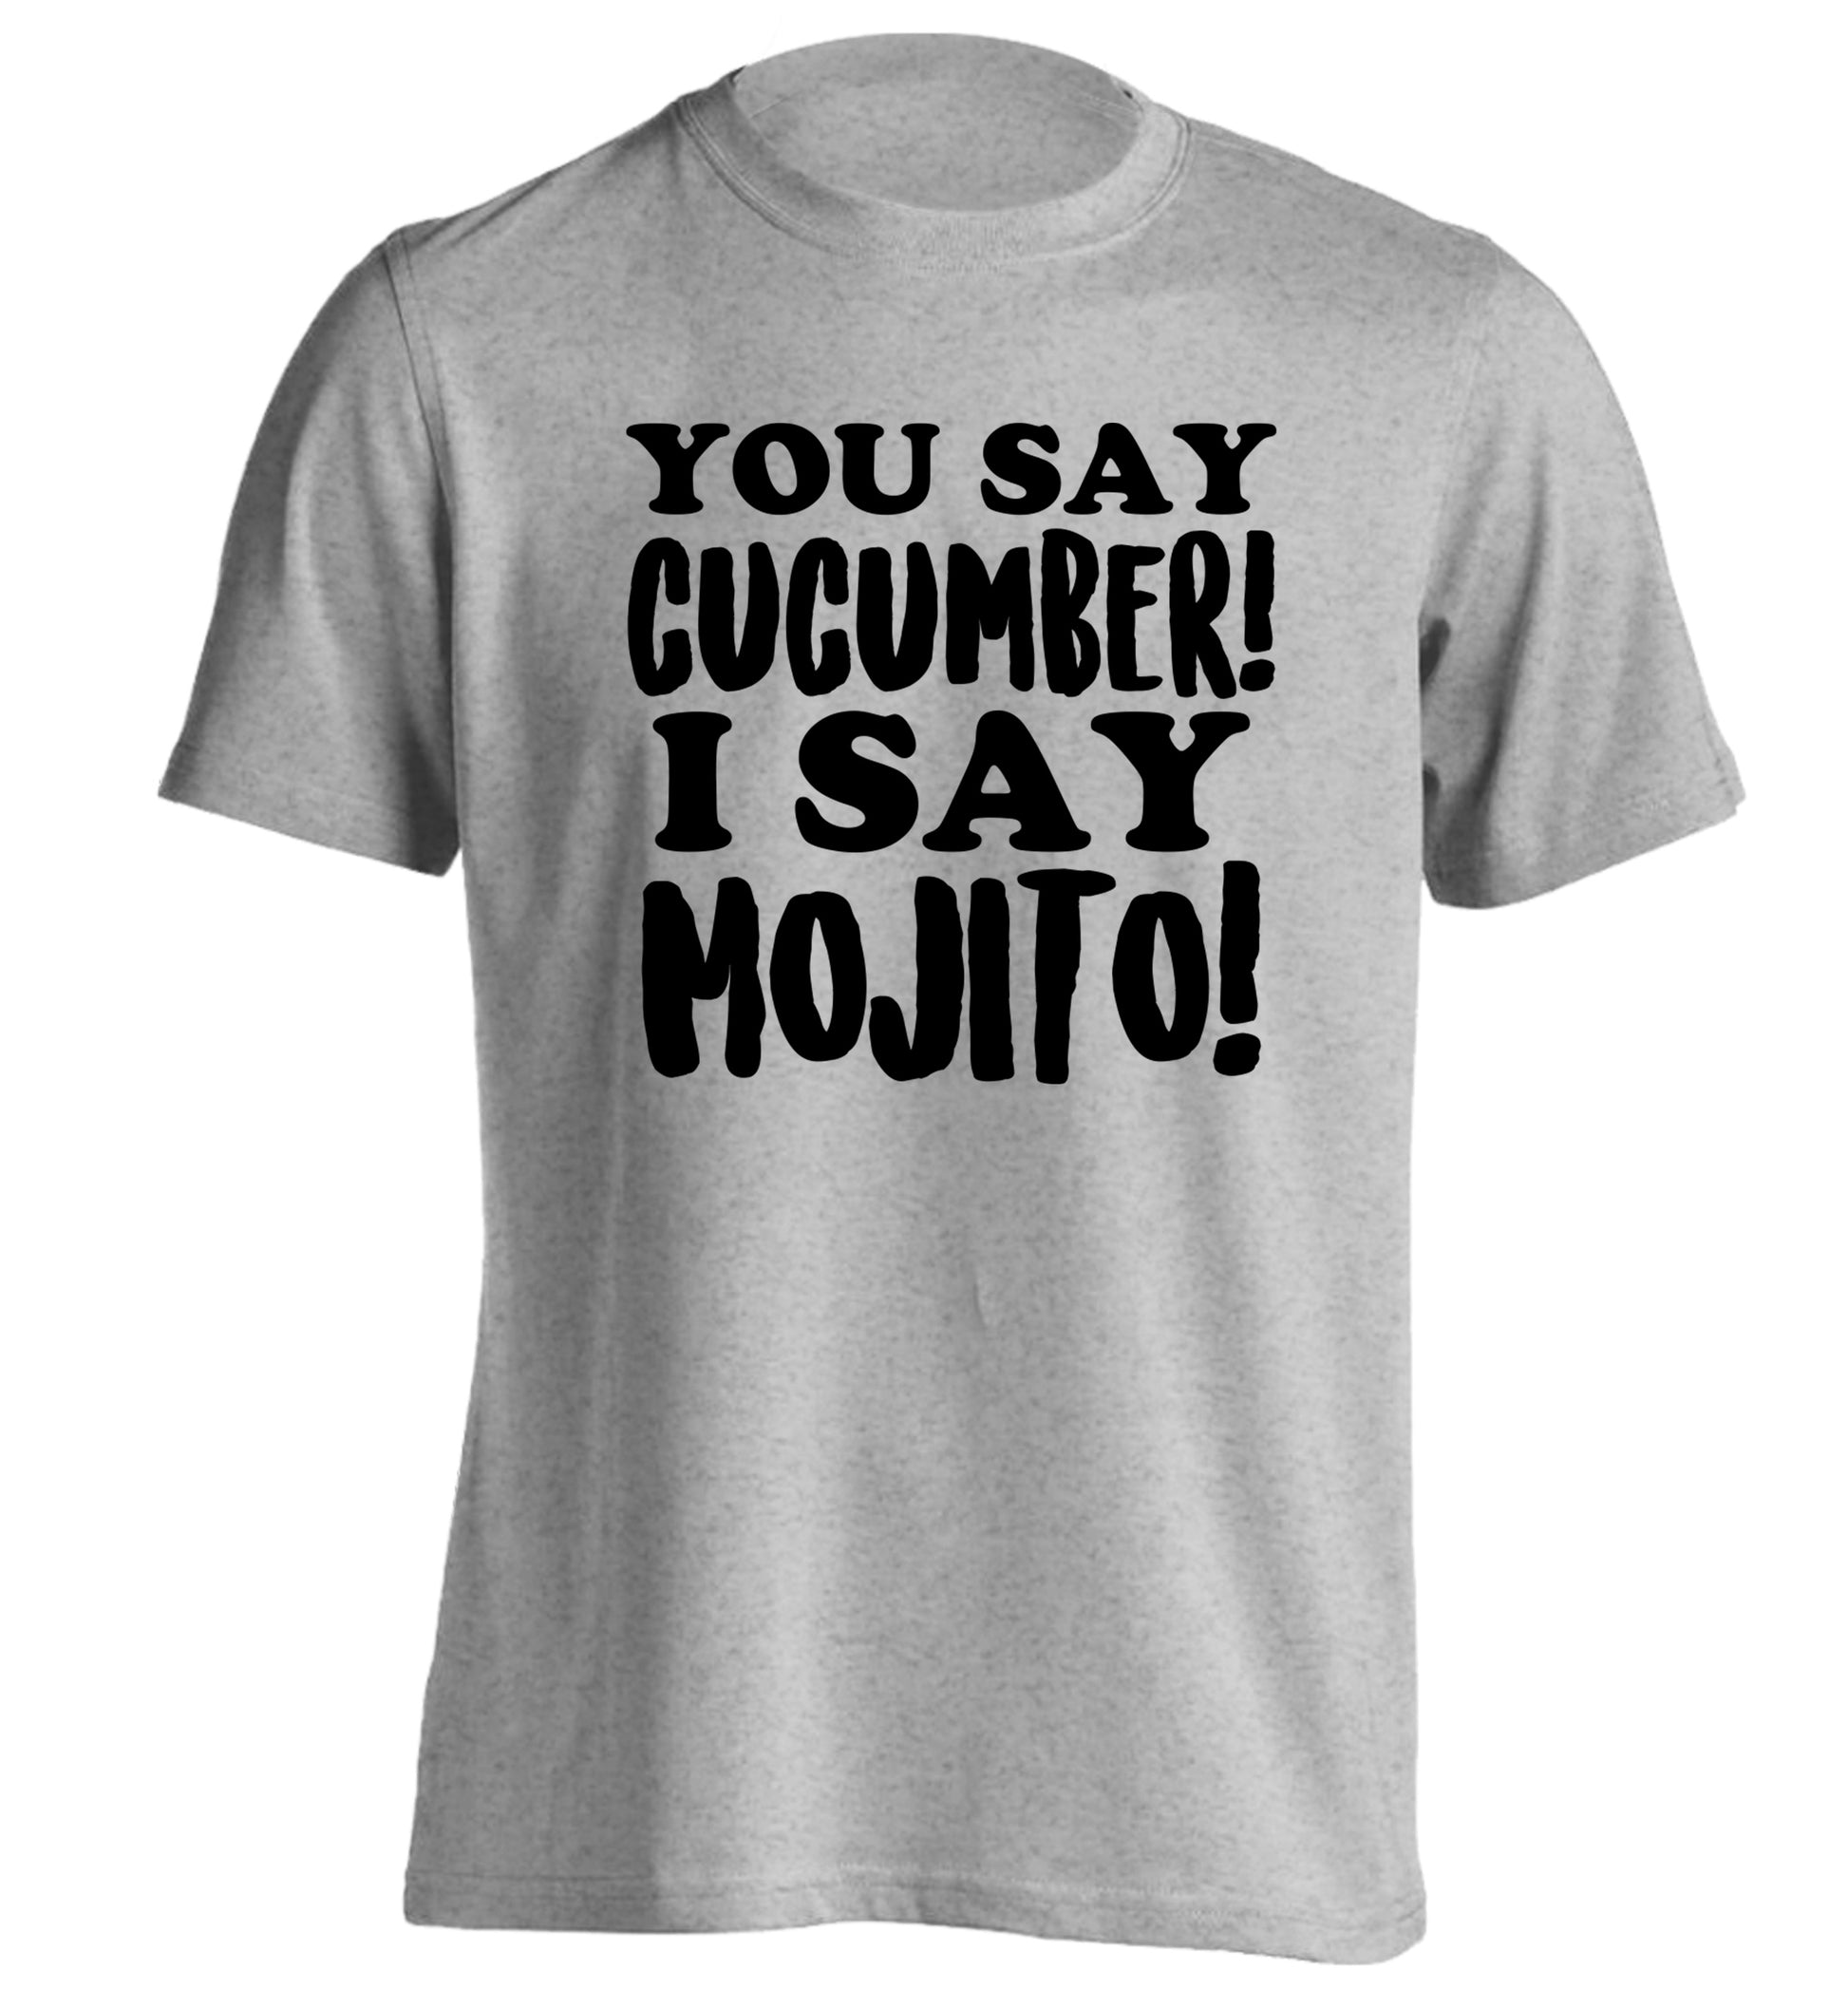 You say cucumber I say mojito! adults unisex grey Tshirt 2XL